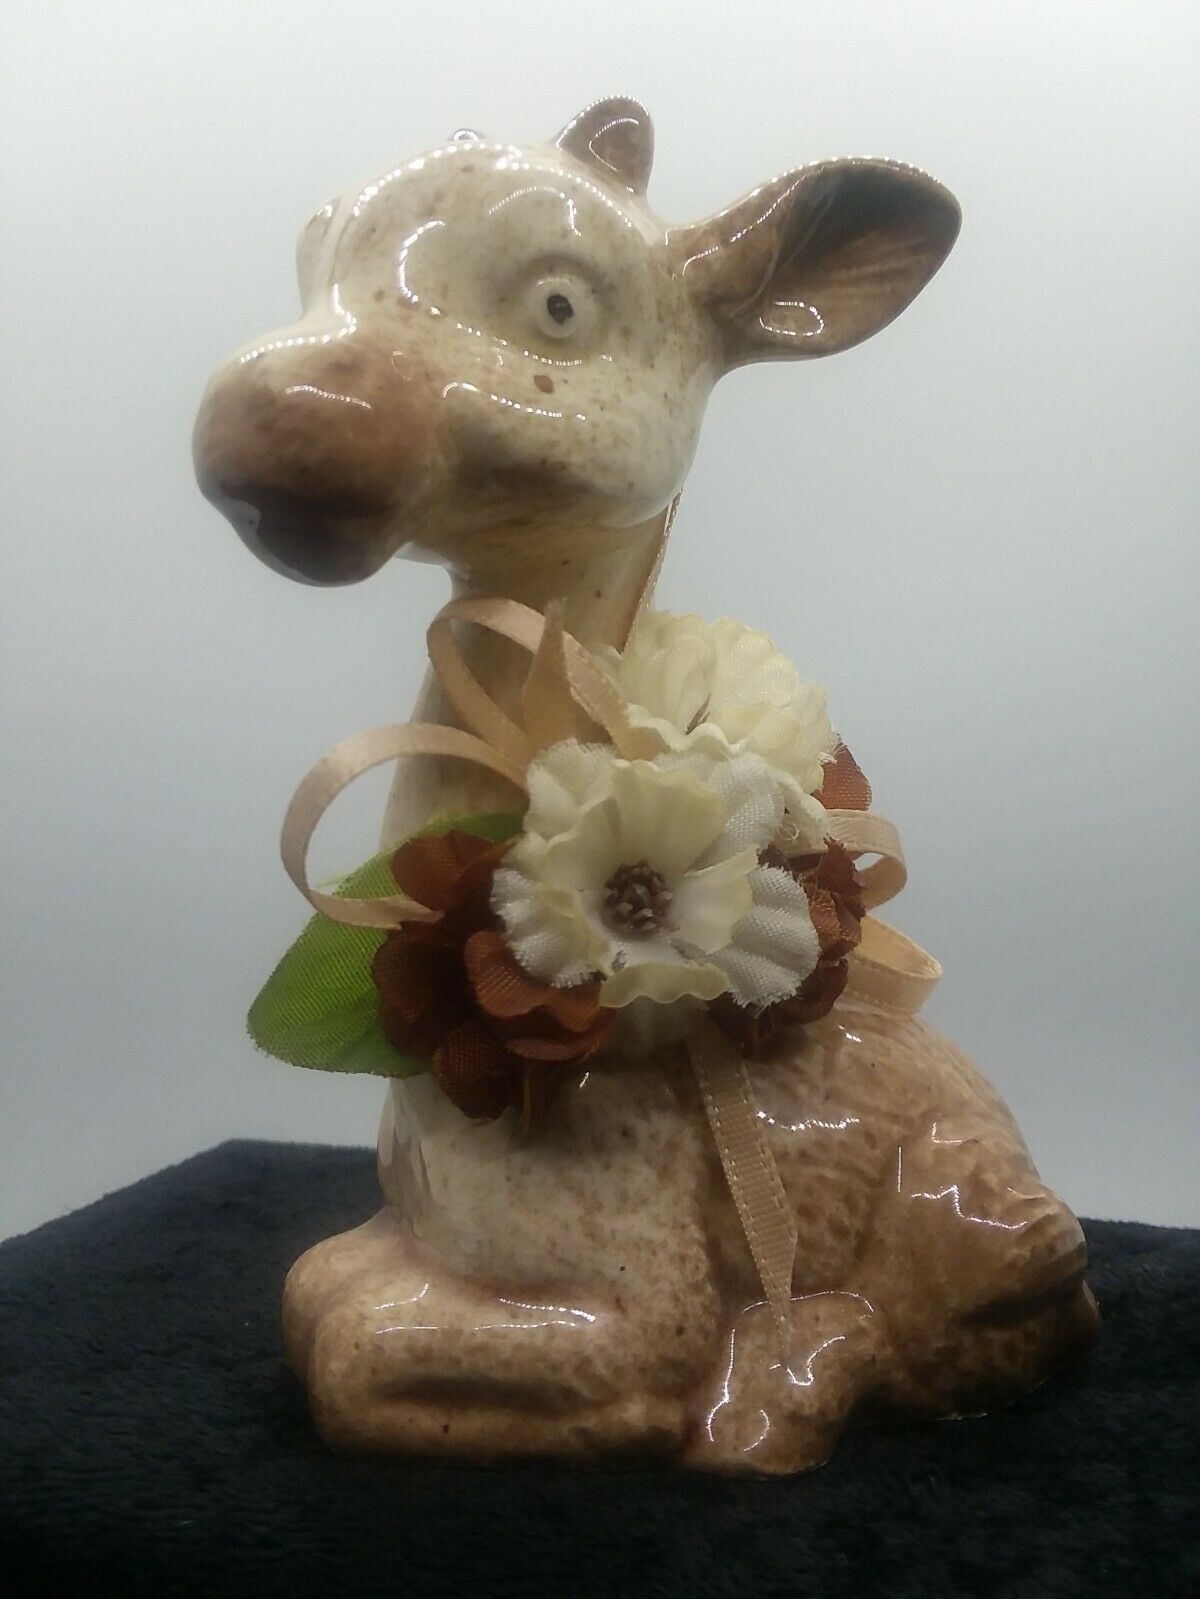 Baby Giraffe Ceramic Figurine